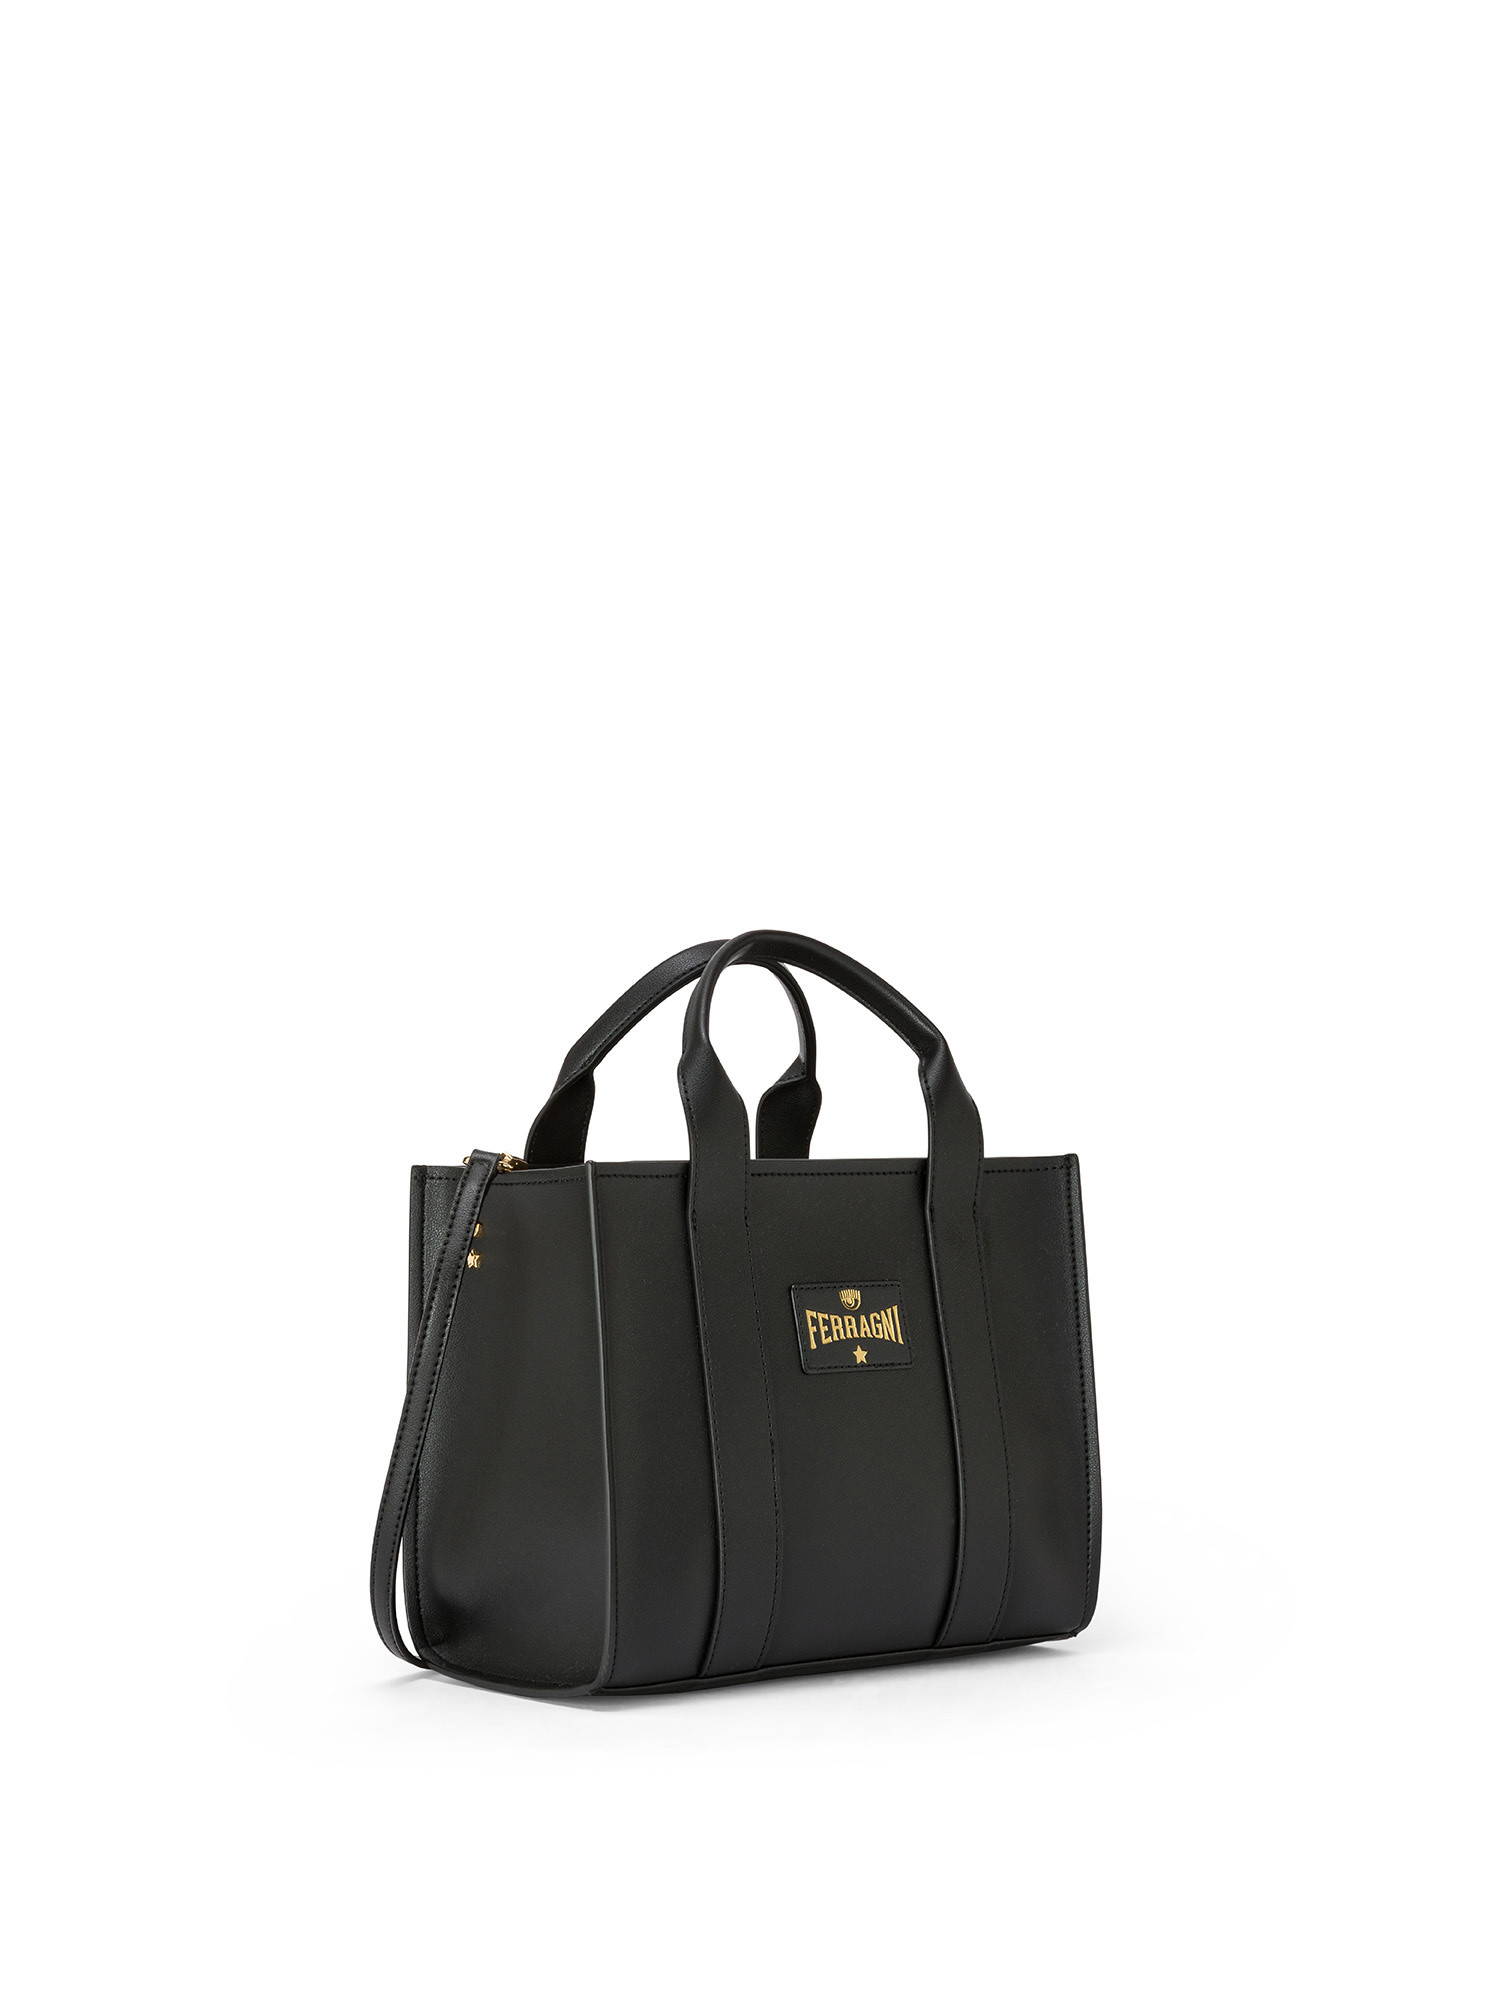 Chiara Ferragni - Shopping bag Range N stretch, Nero, large image number 1